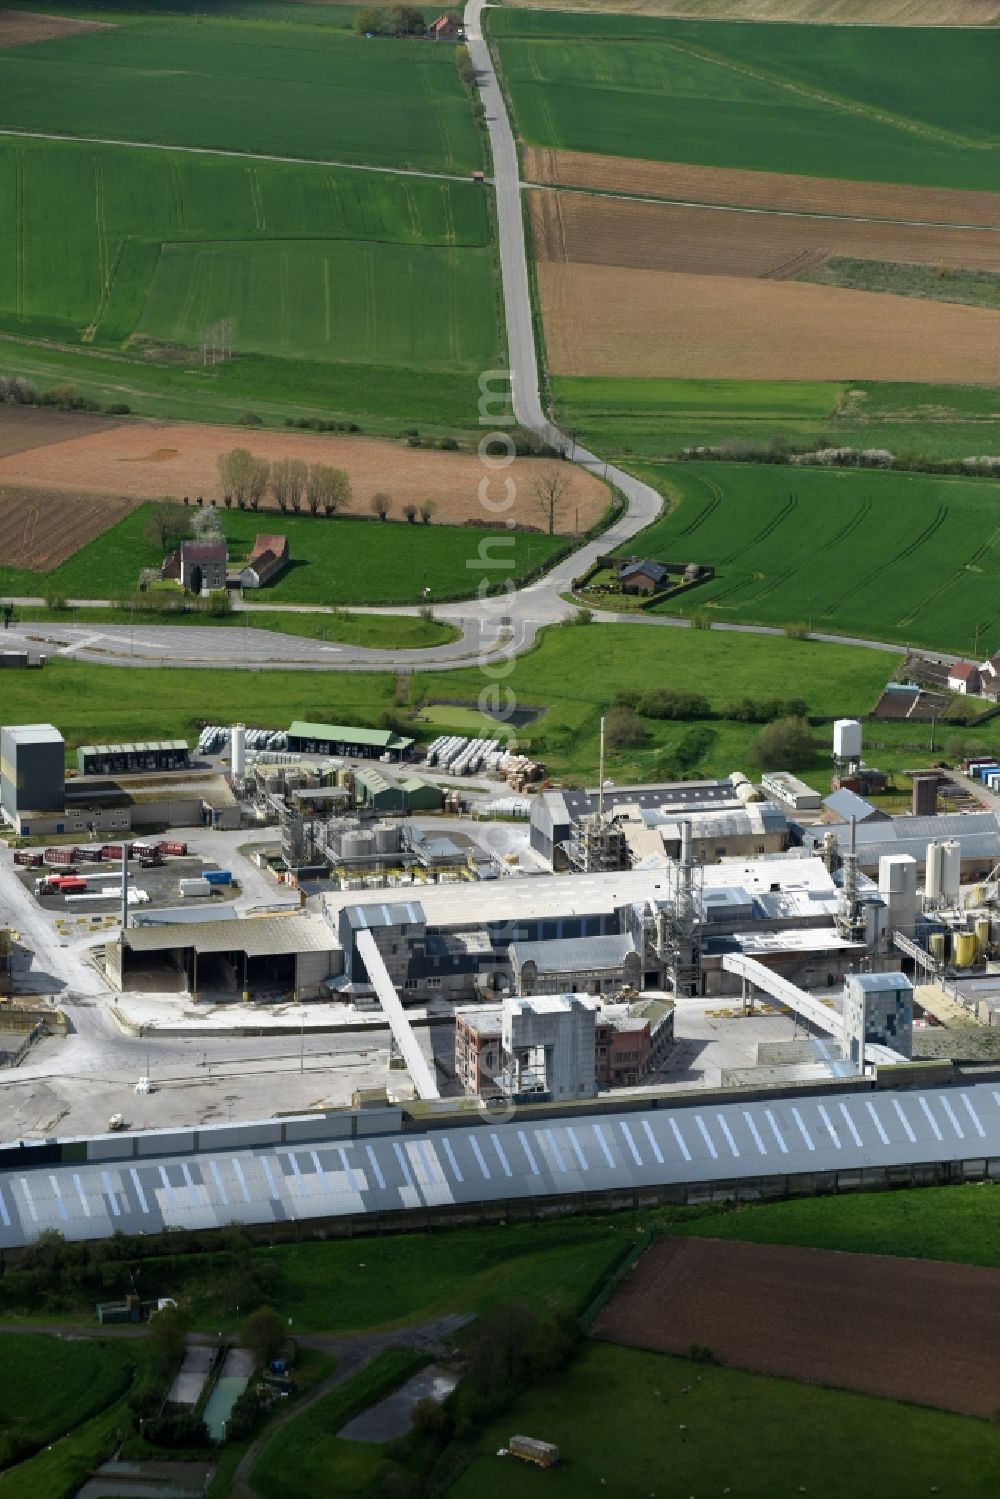 Aerial image Frasnes-lez-Anvaing - Building and production halls on the premises of Rosier in Frasnes-lez-Anvaing in Region wallonne, Belgium